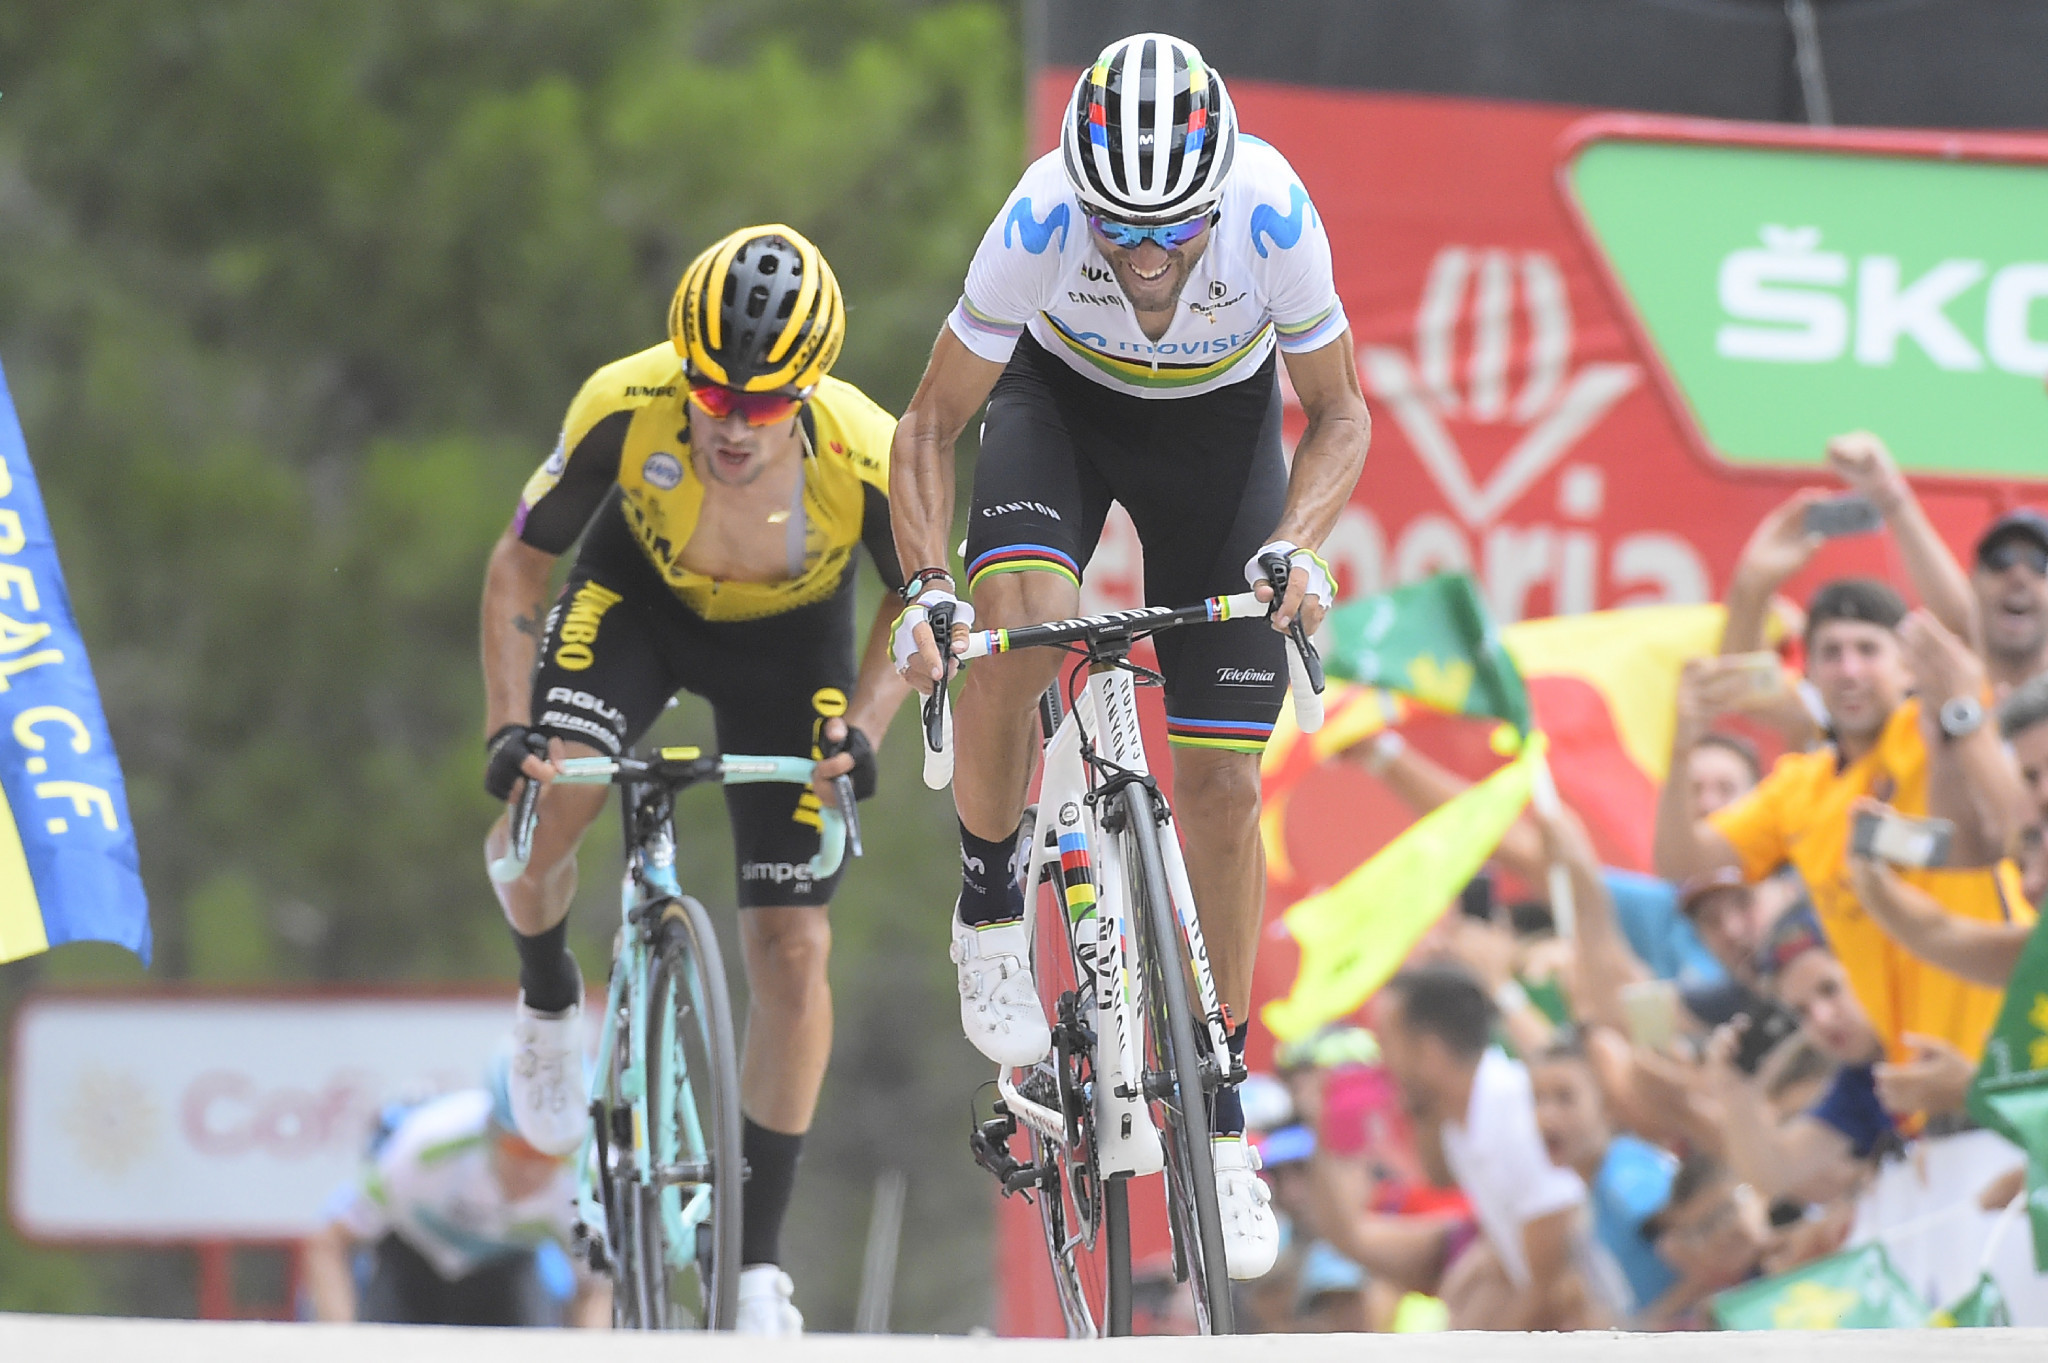 Lopez retakes lead after Valverde wins stage seven at Vuelta a España